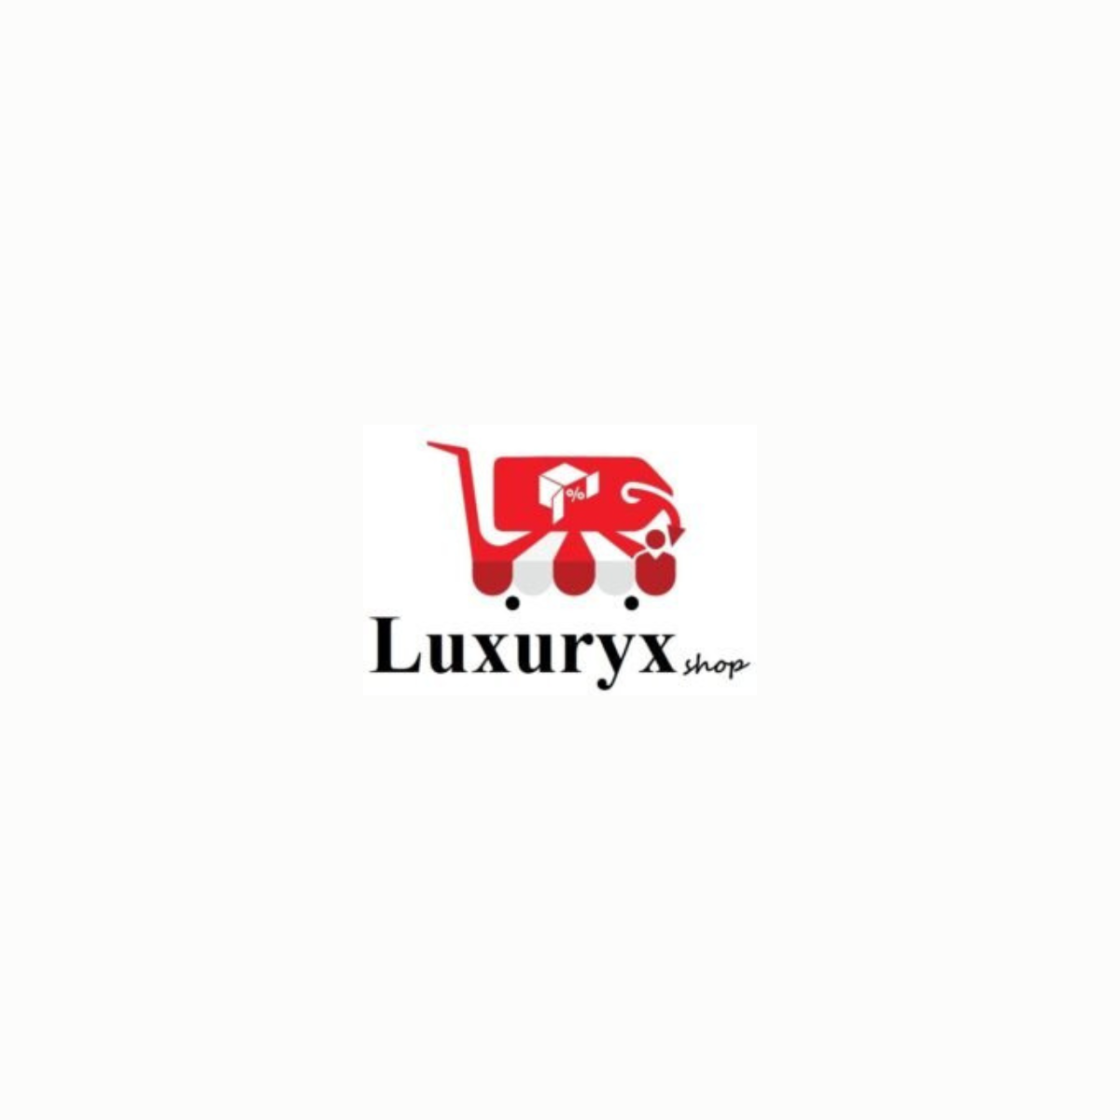 Luxury X Shop